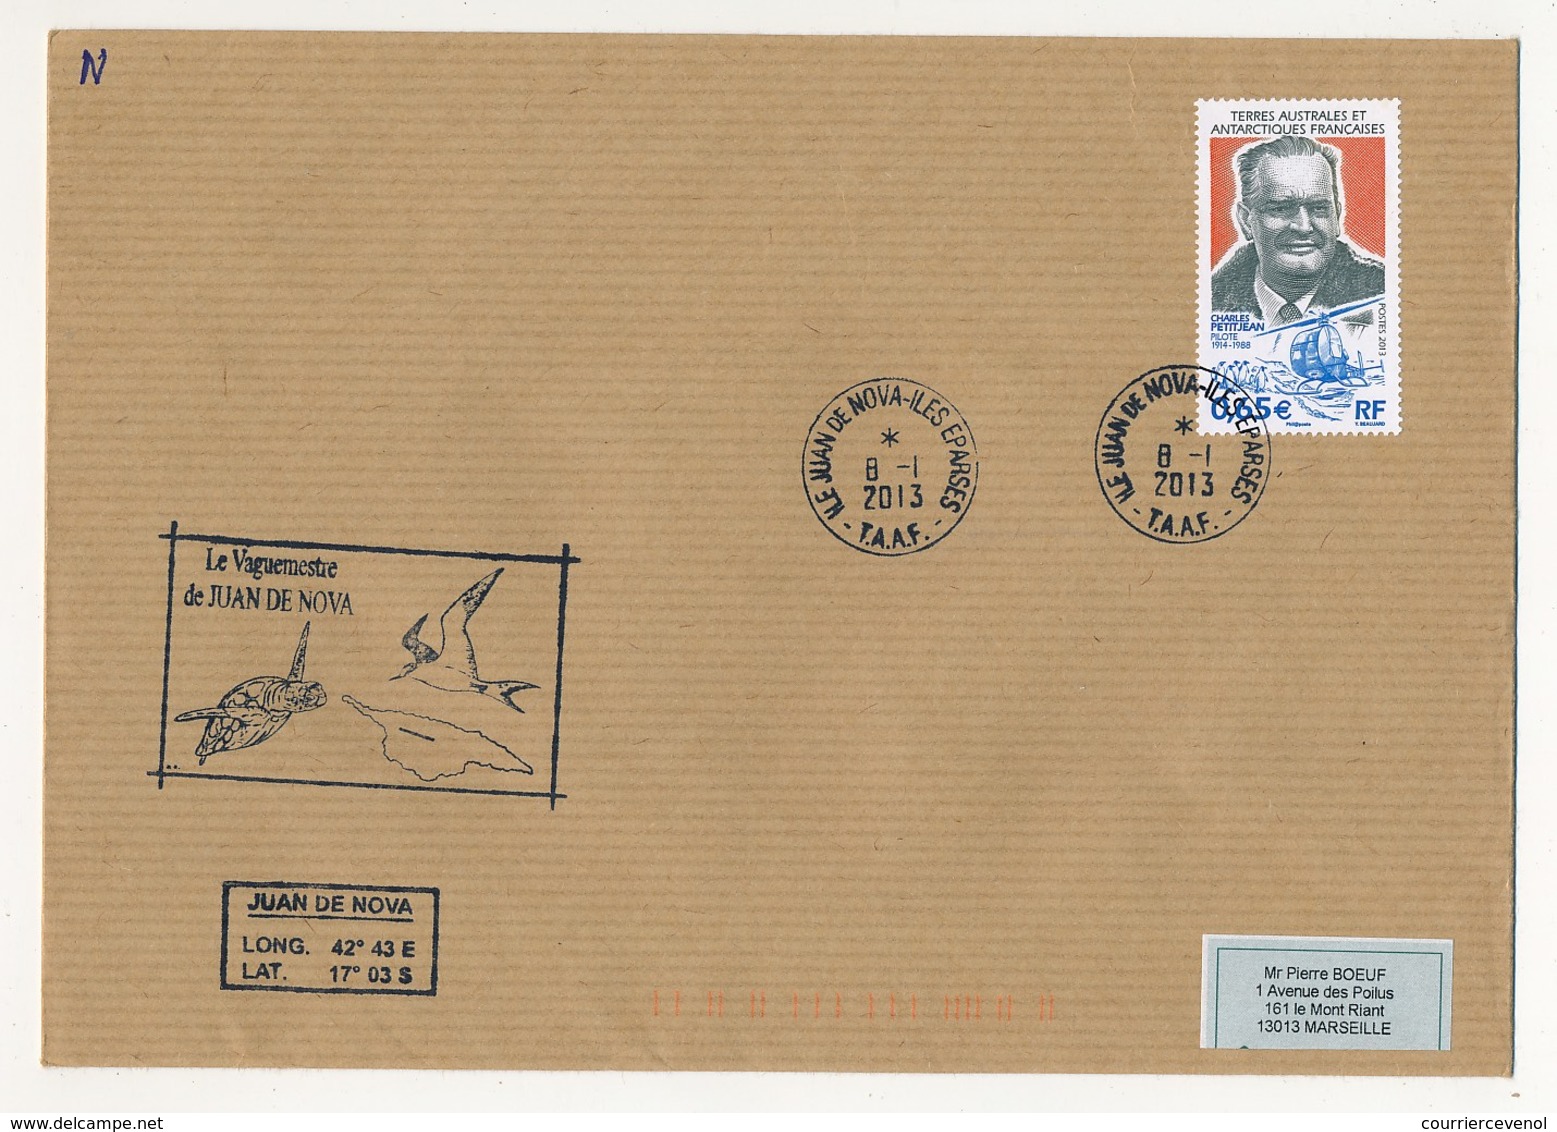 TAAF - Enveloppe Affr. 0,65E Charles Petitjean - Ile Juan De Nova - Iles Eparses 8-1-2013 + Cachet Vaguemestre - Covers & Documents